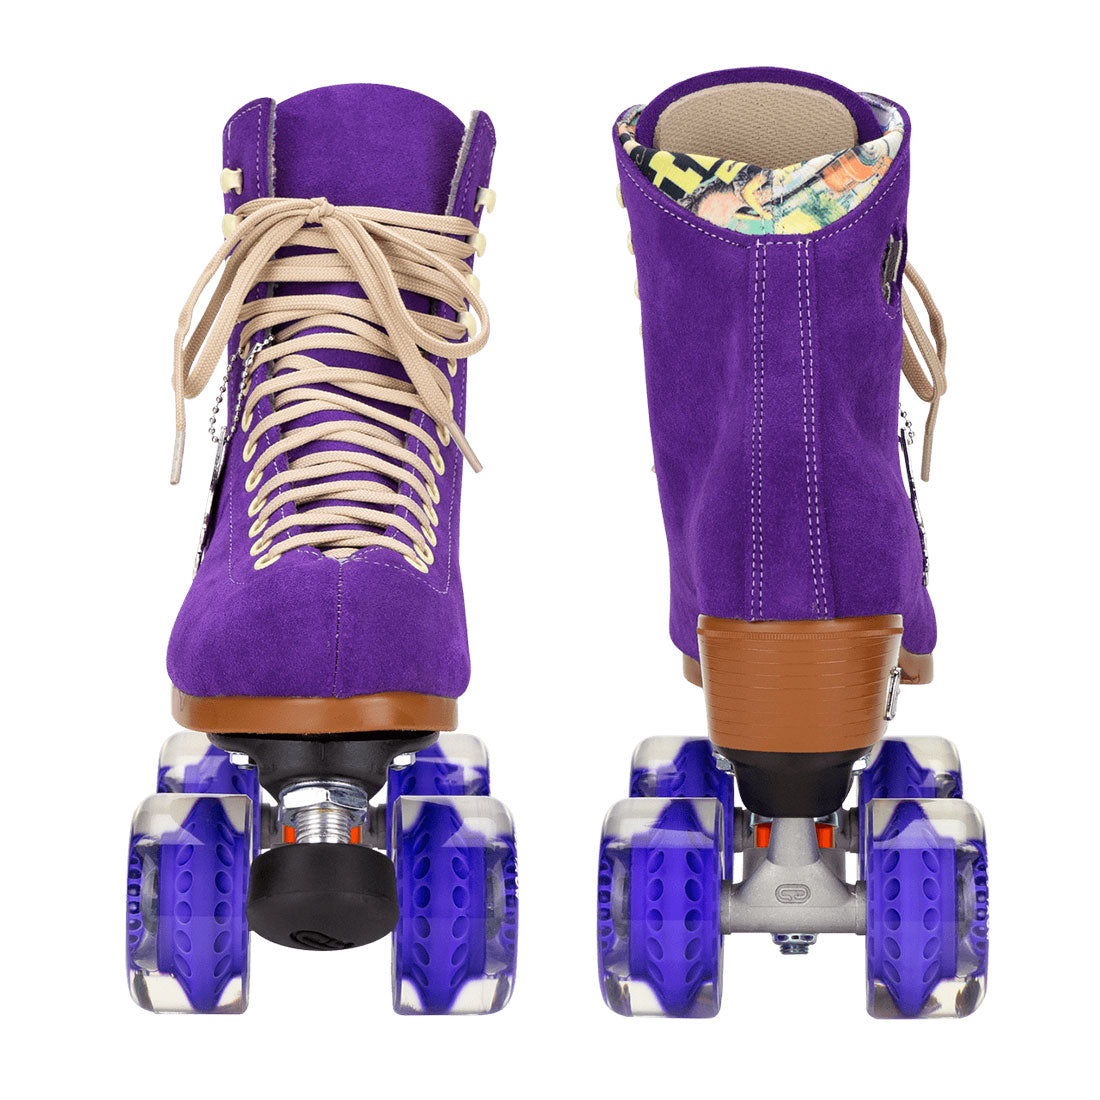 Moxi Lolly Skate - Taffy Purple Roller Skates